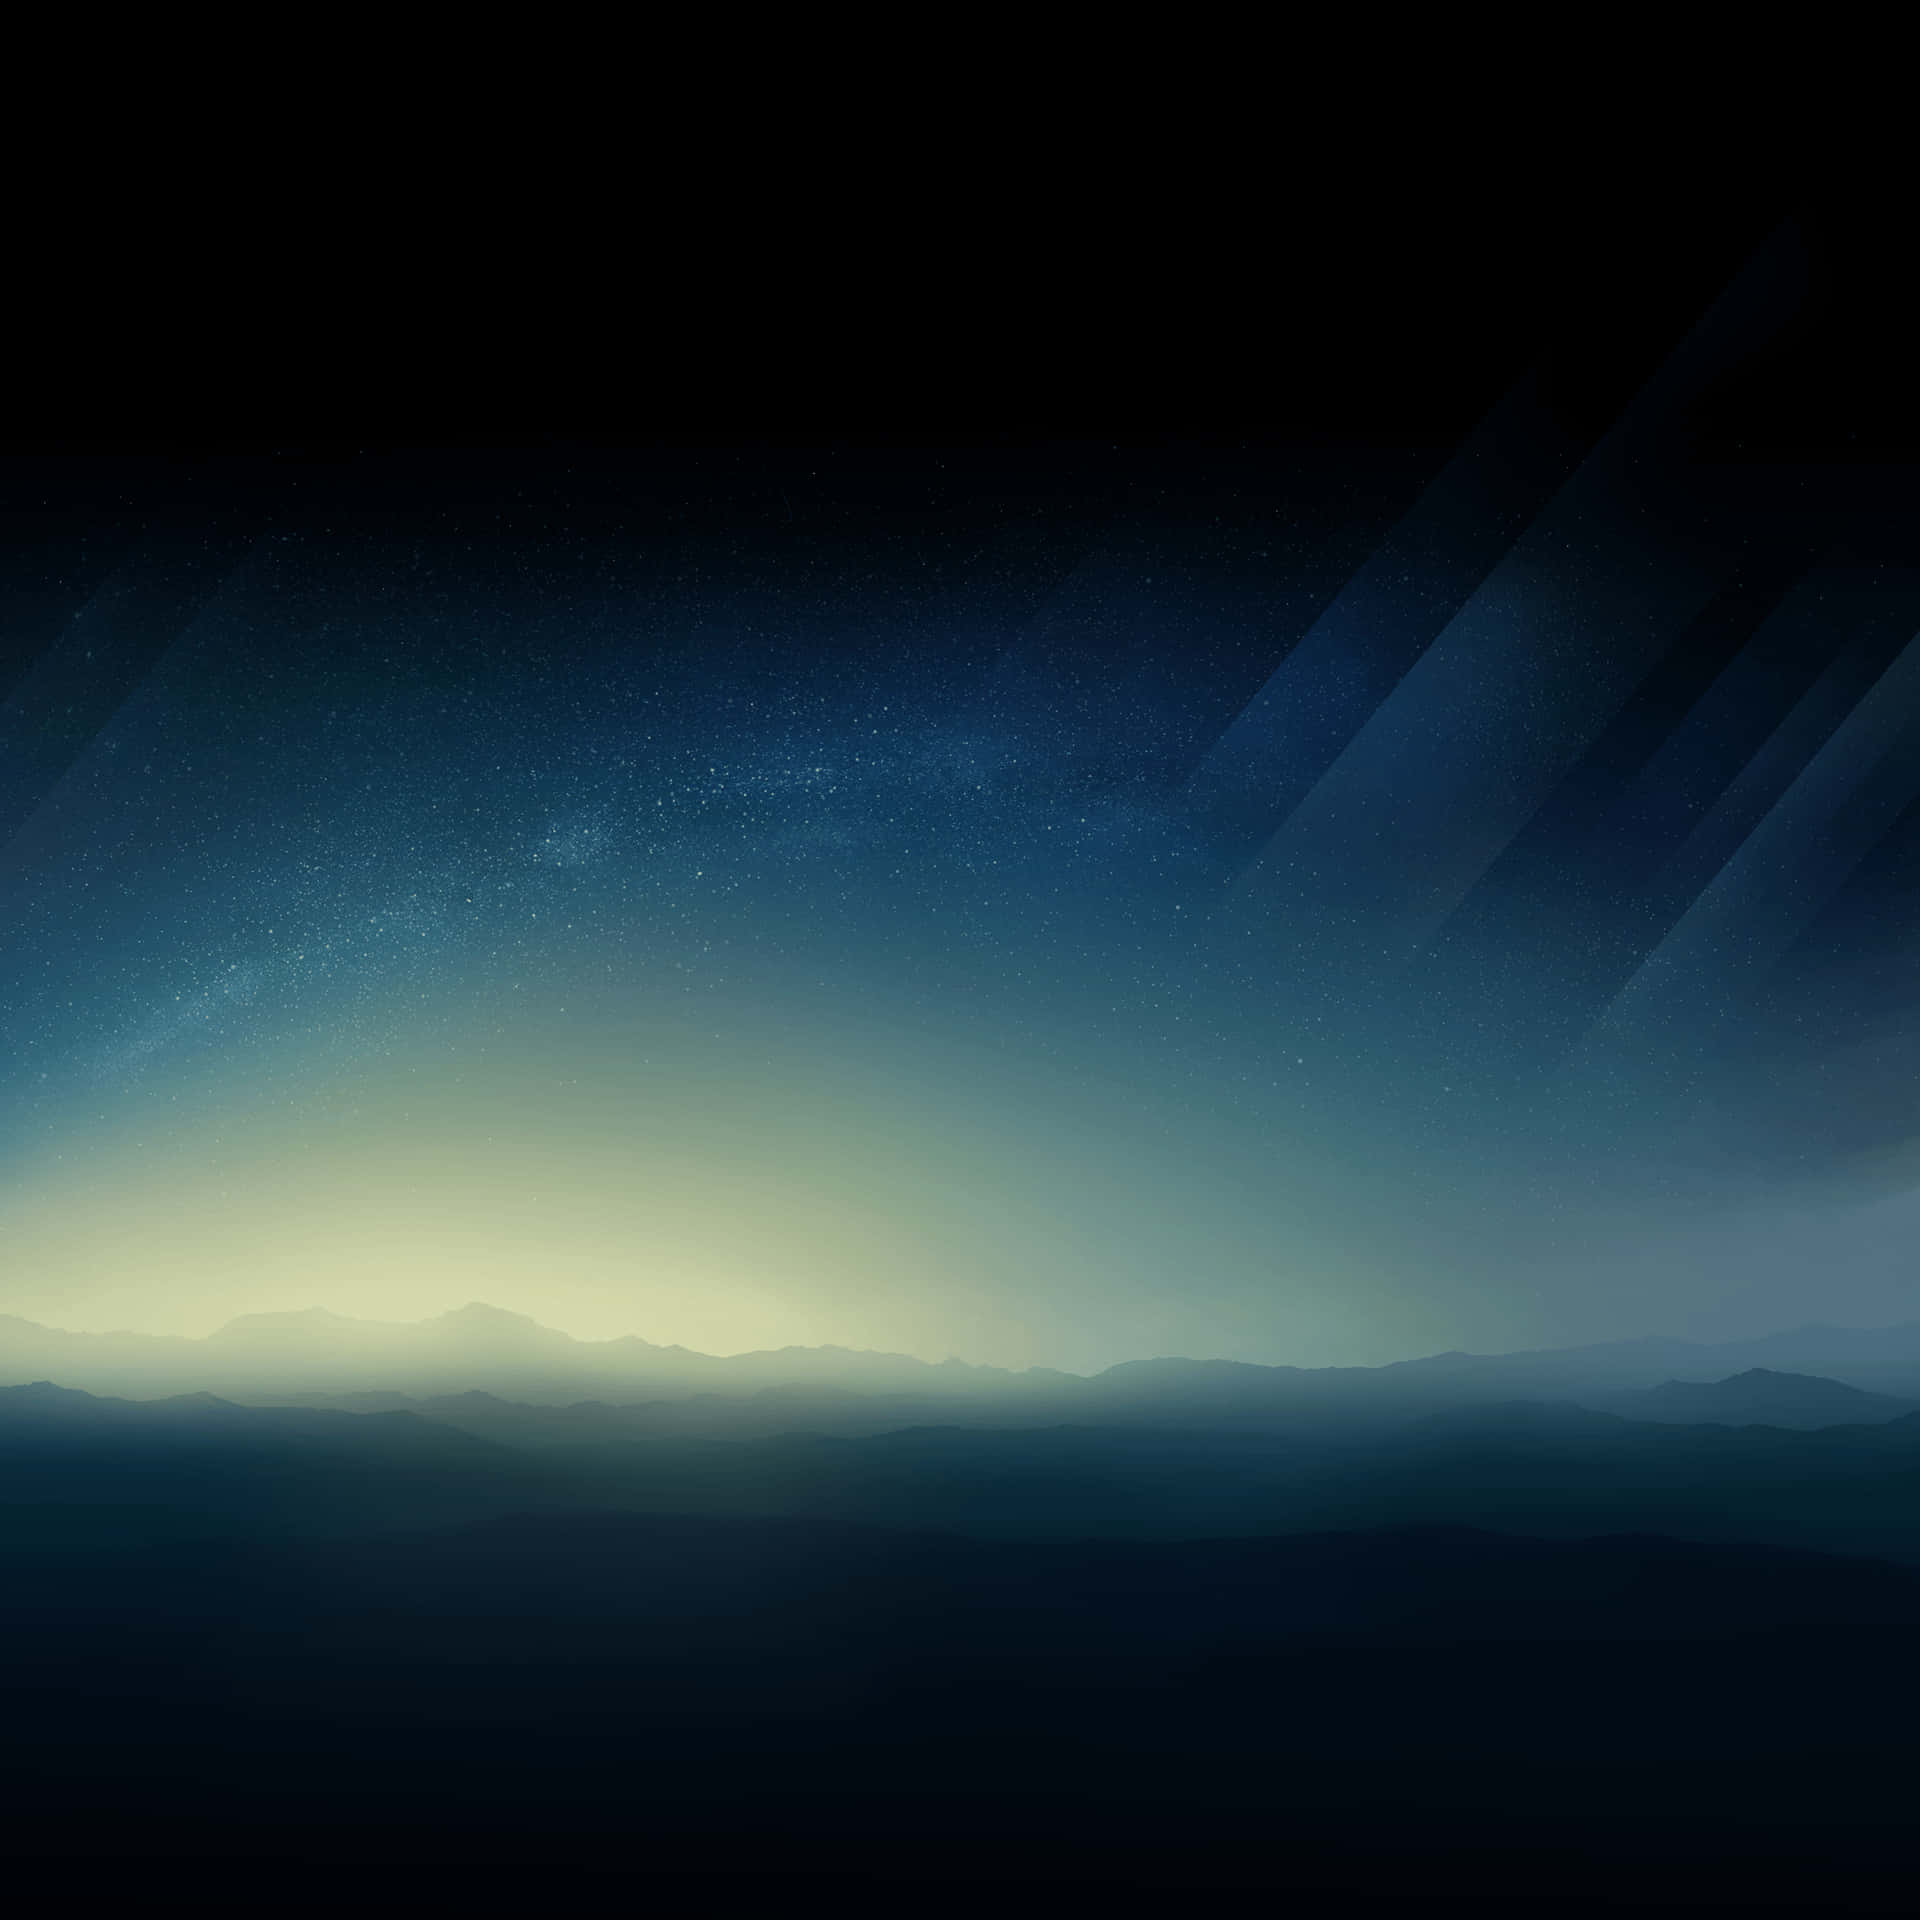 Samsung Dex With A Glowing Horizon Background